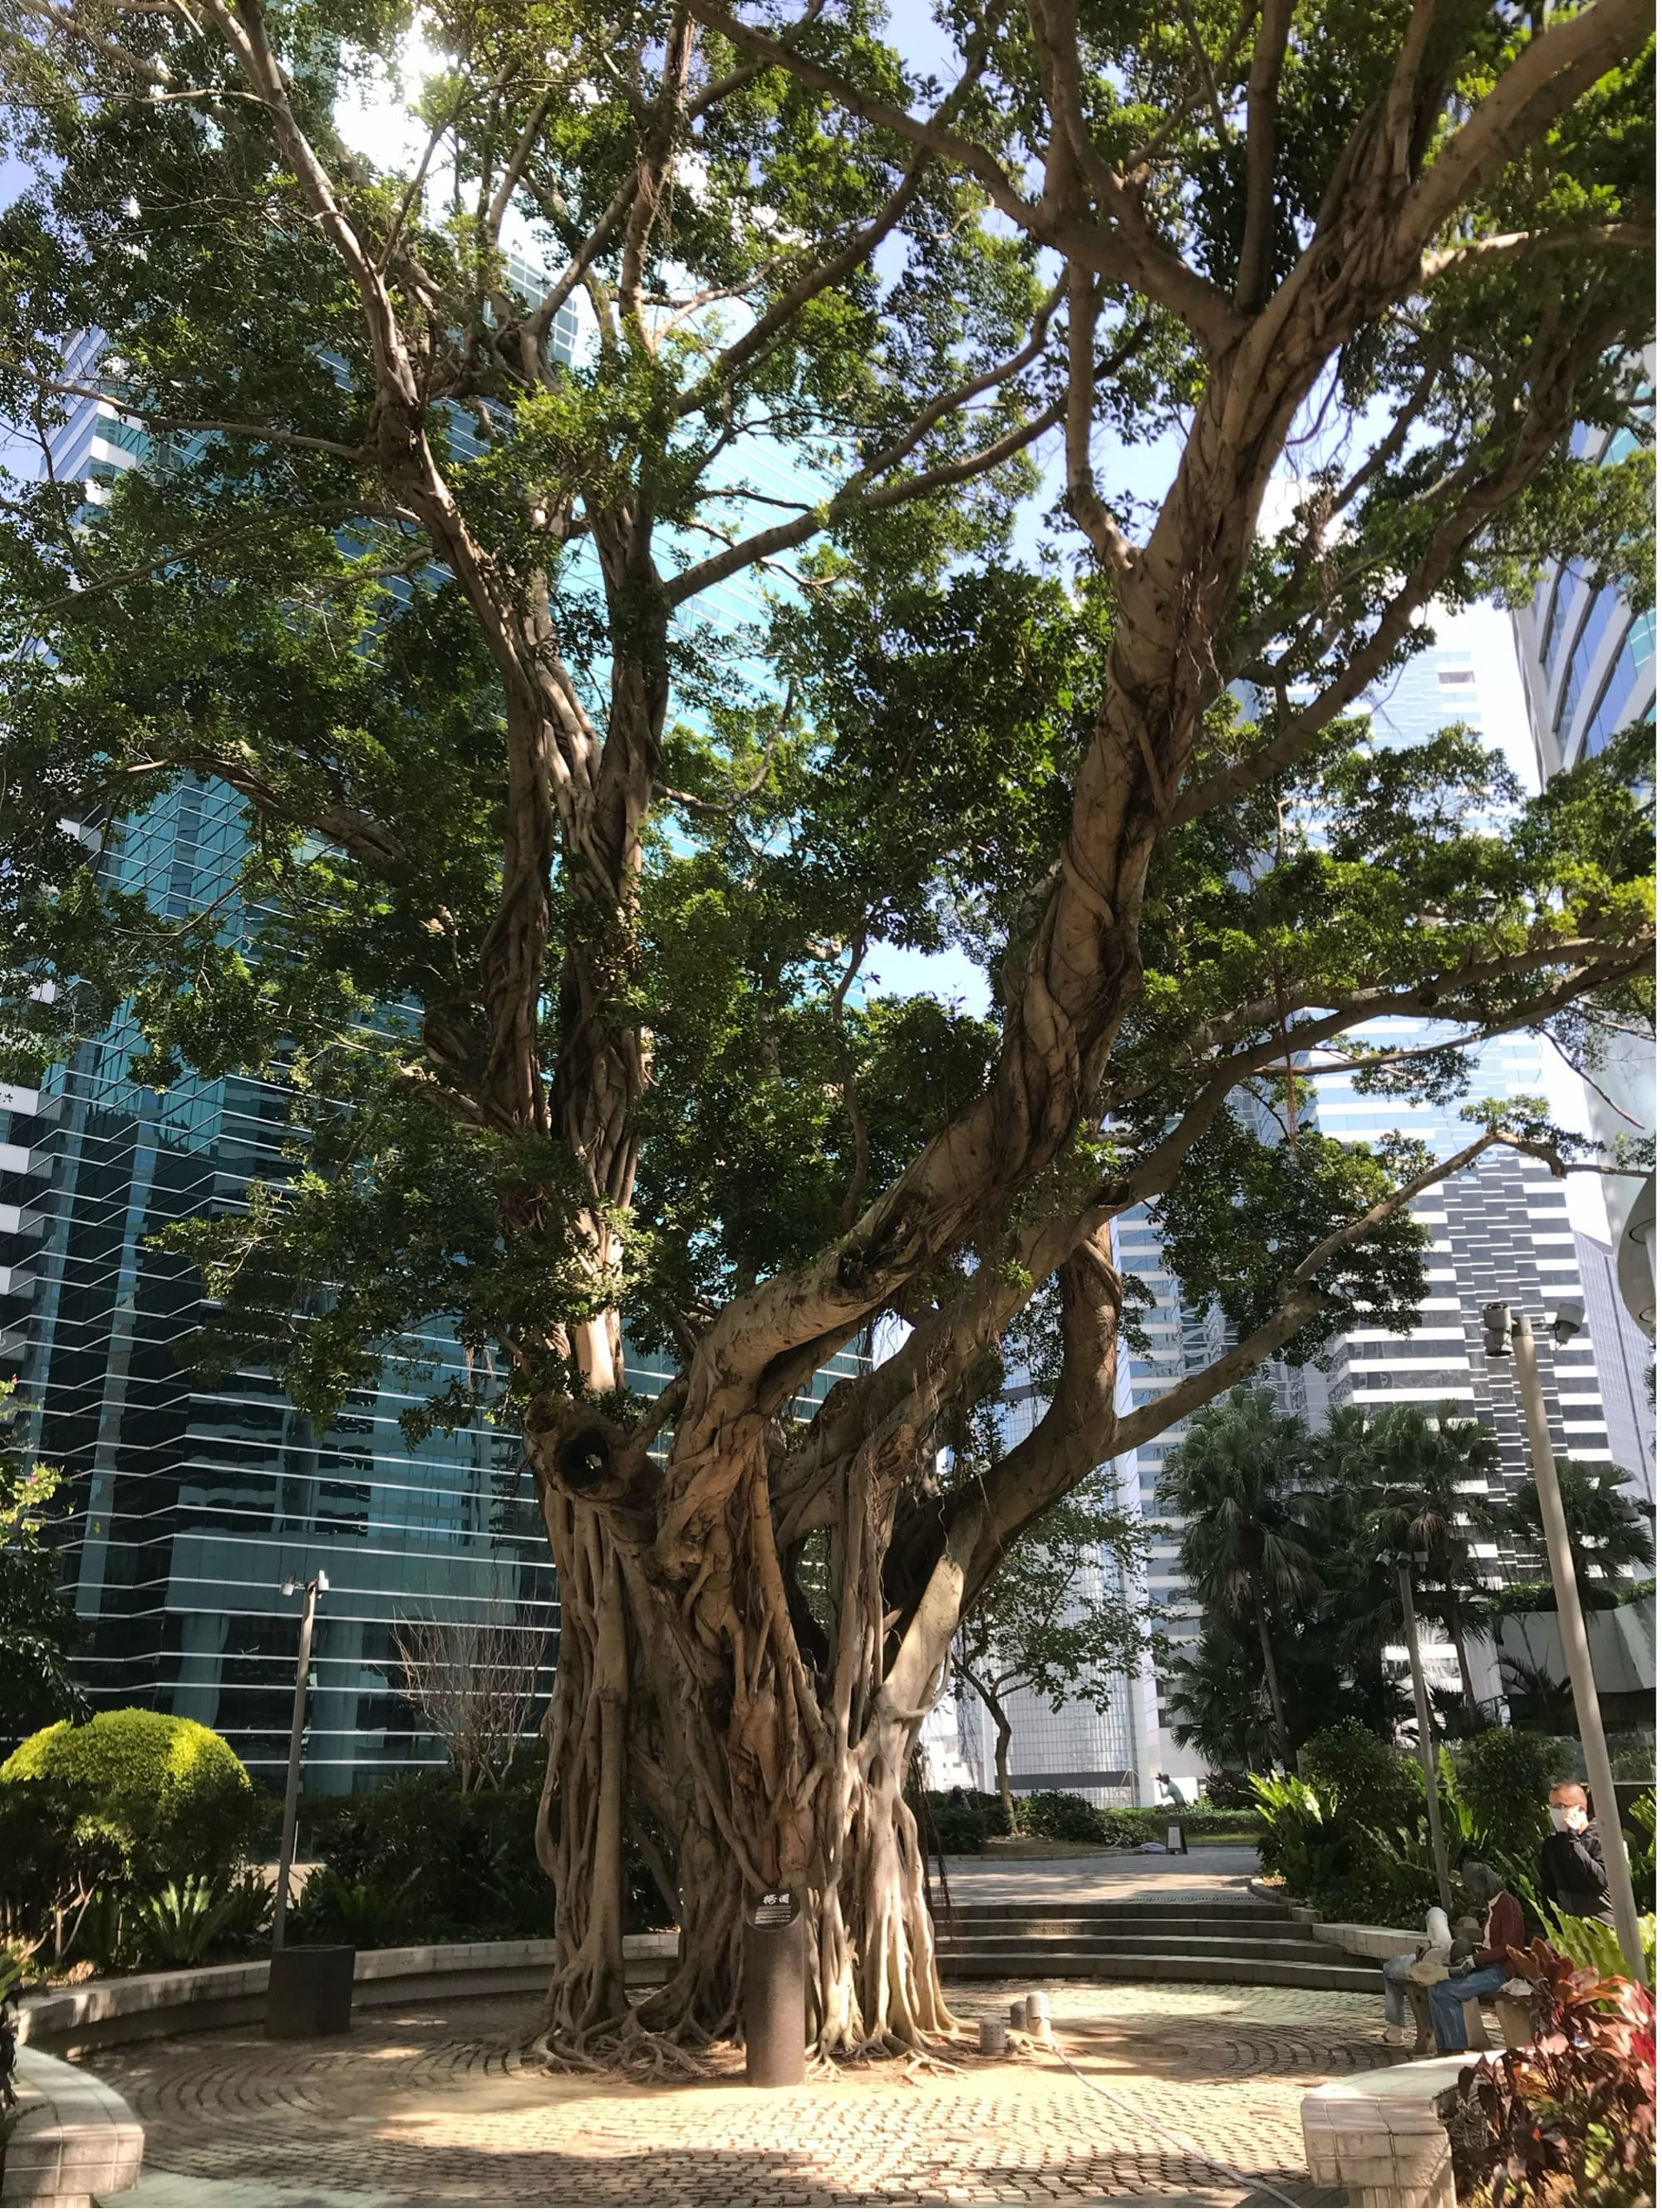 The Banyan Trees of Hong Kong (Kennedy Town and Sai Ying Pun)